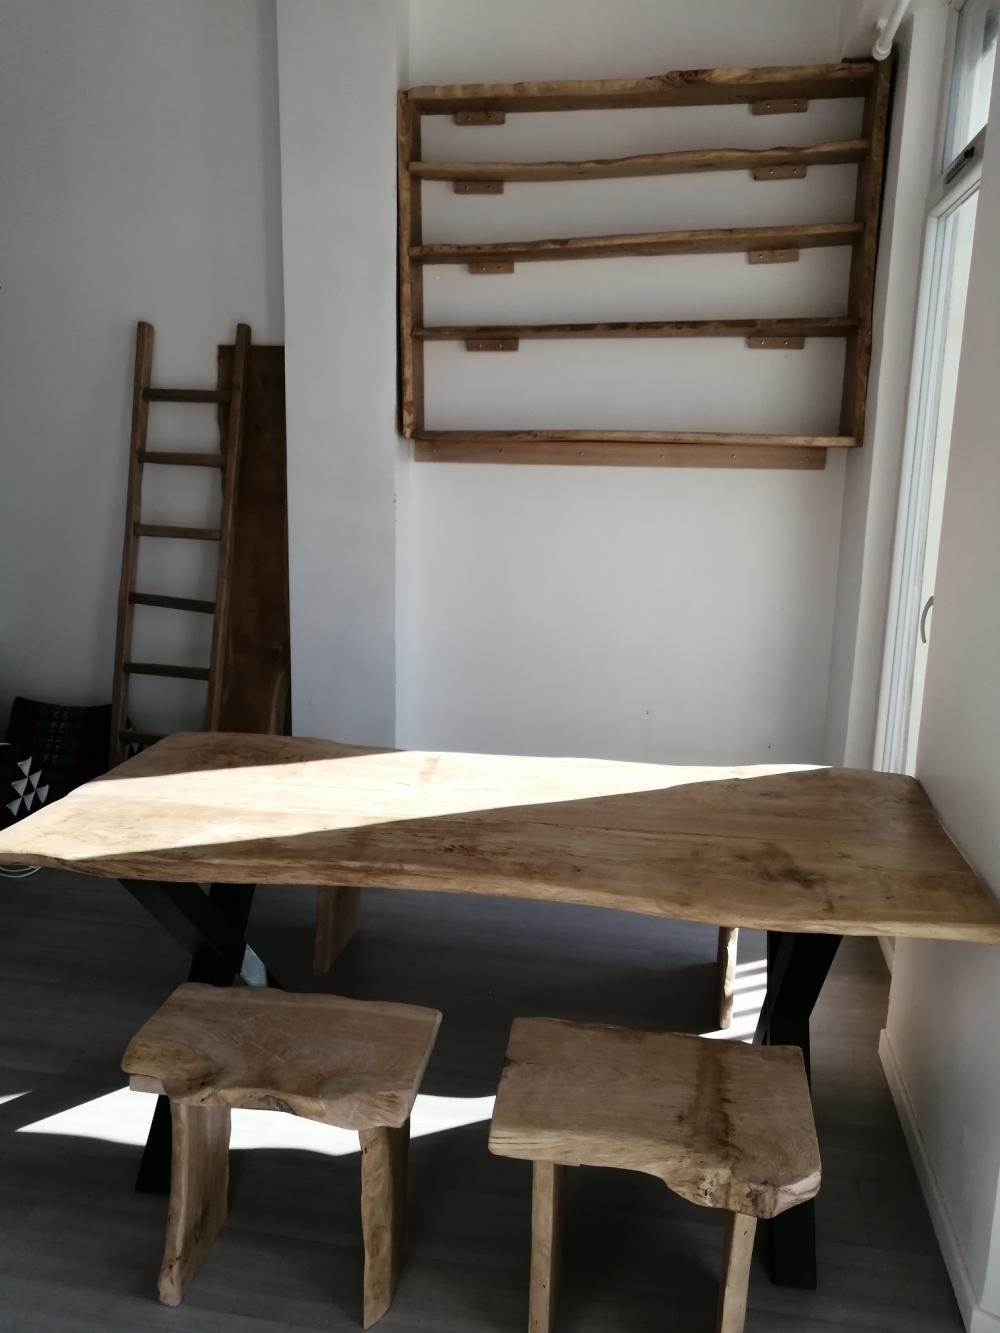 Table en bois bords irréguliers